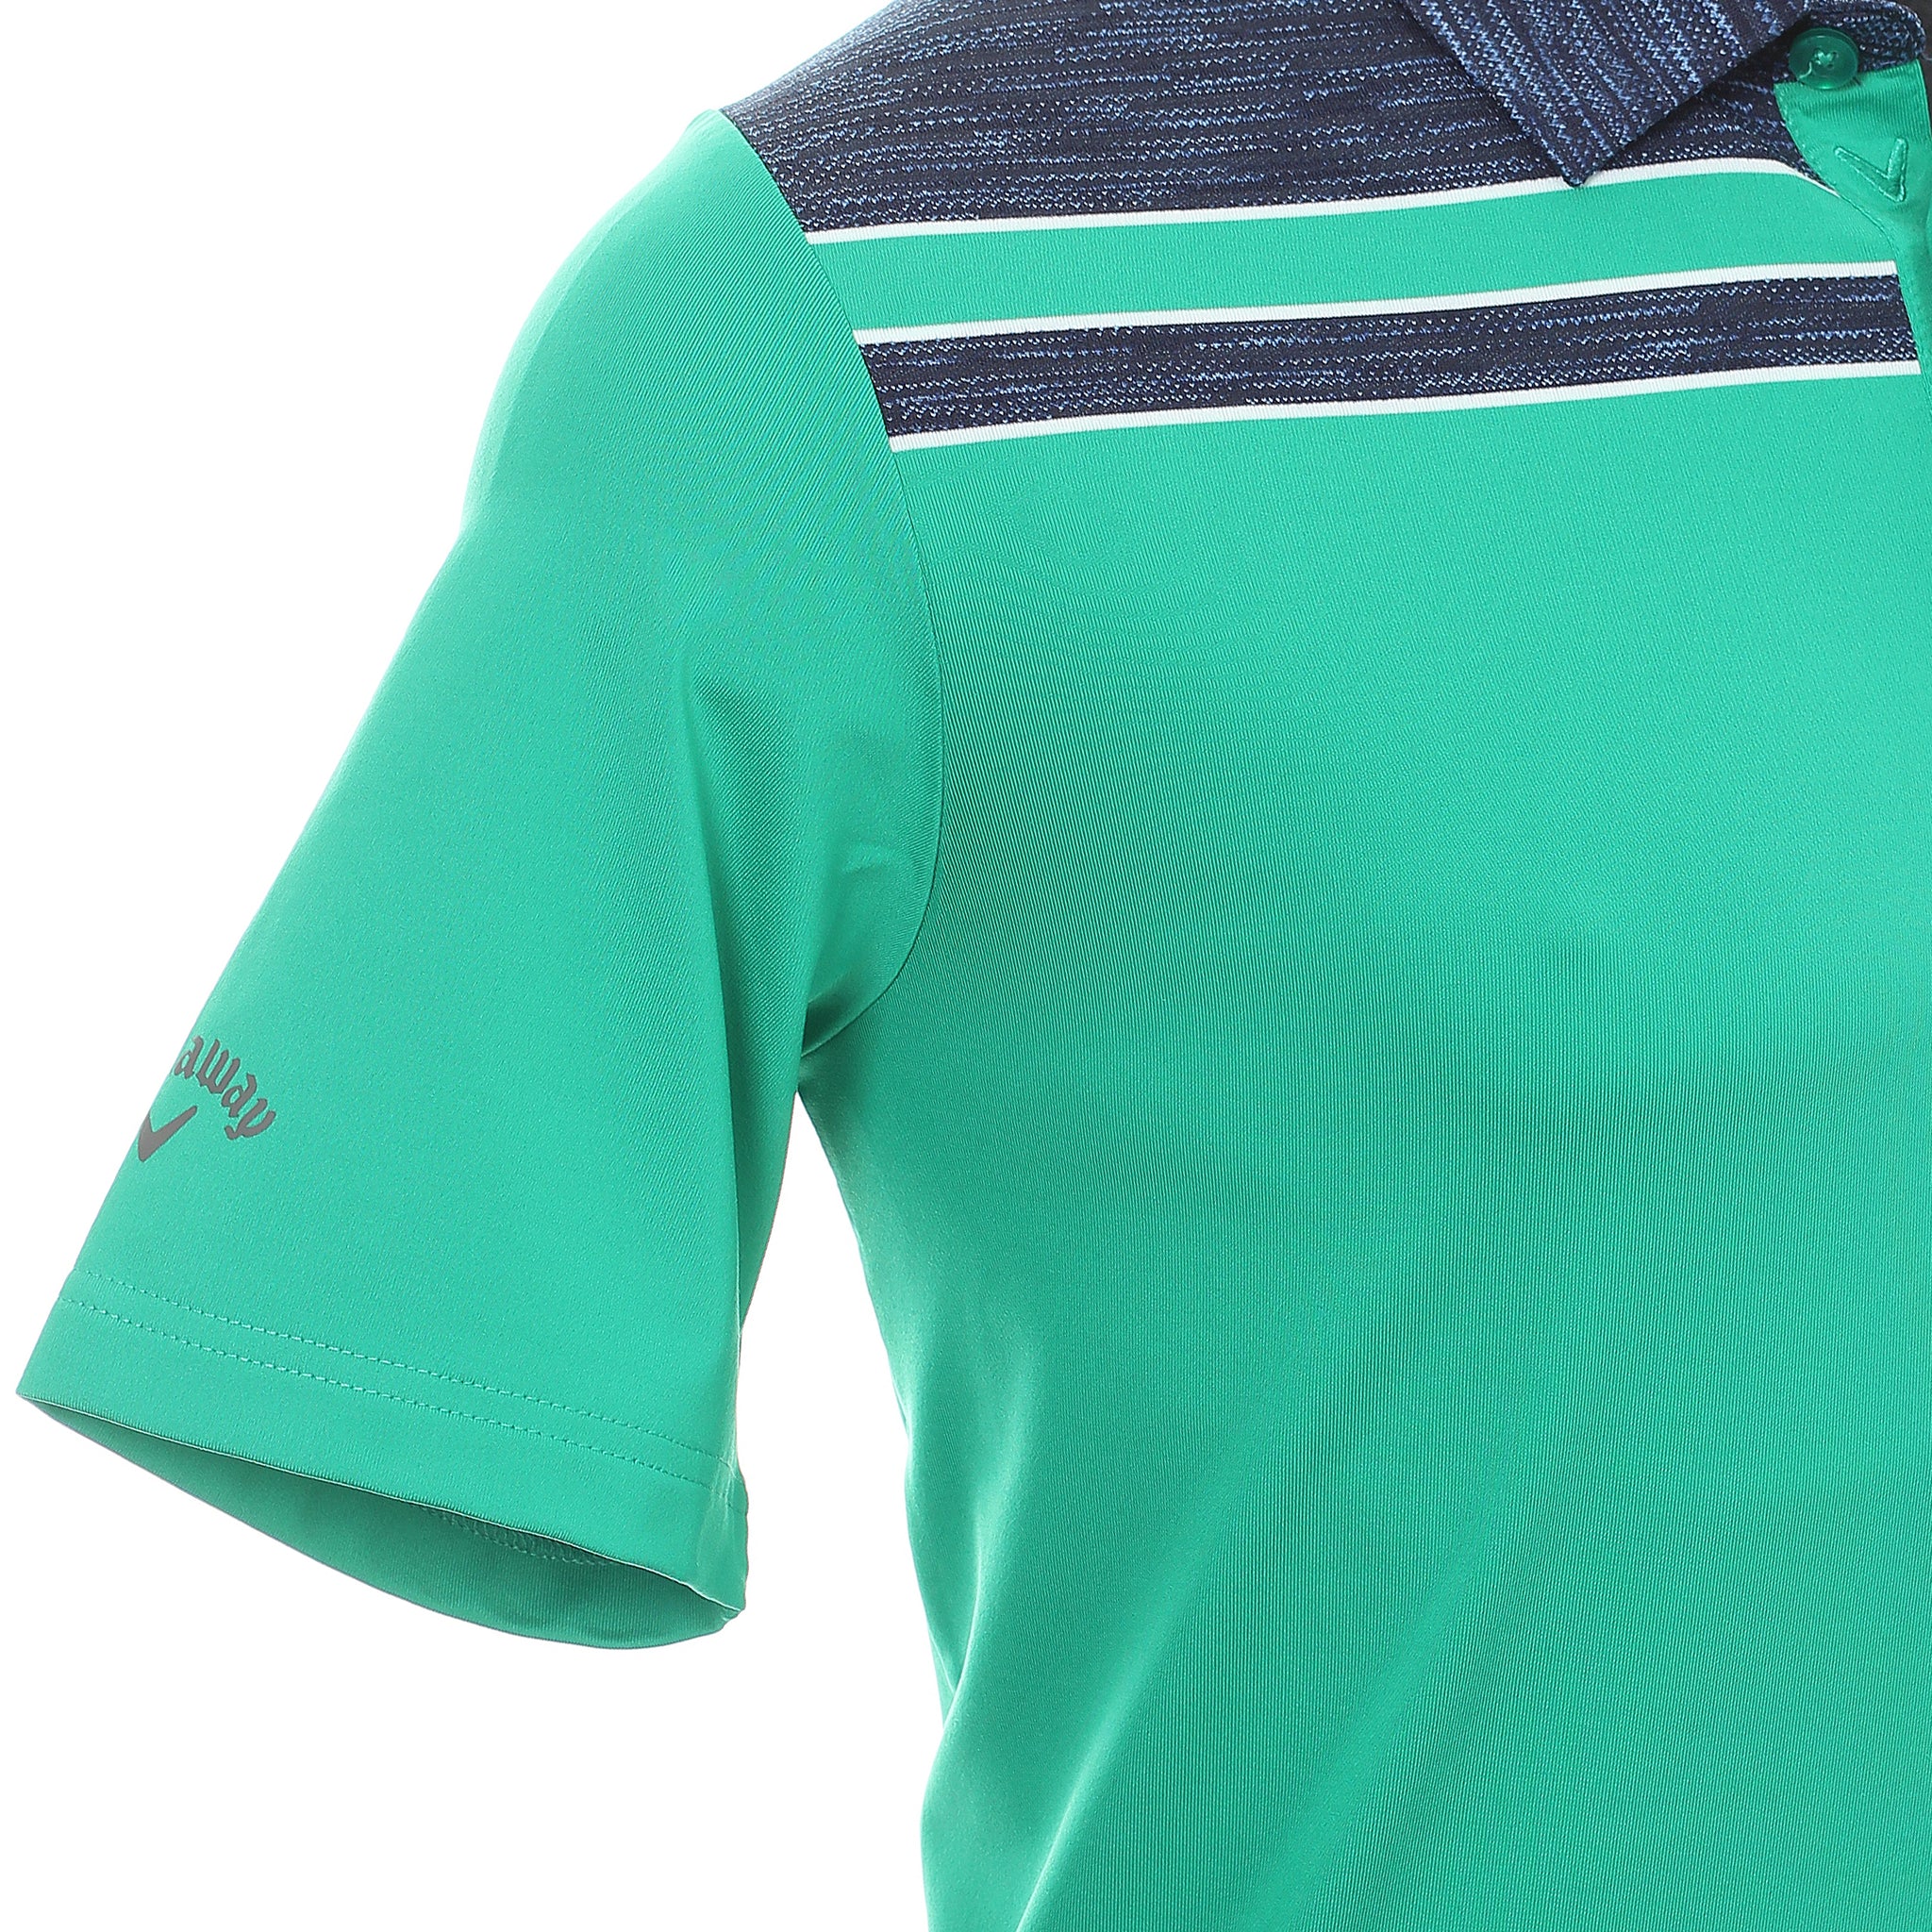 callaway-golf-engineered-chev-printed-shirt-cgkfb0l1-golf-green-324